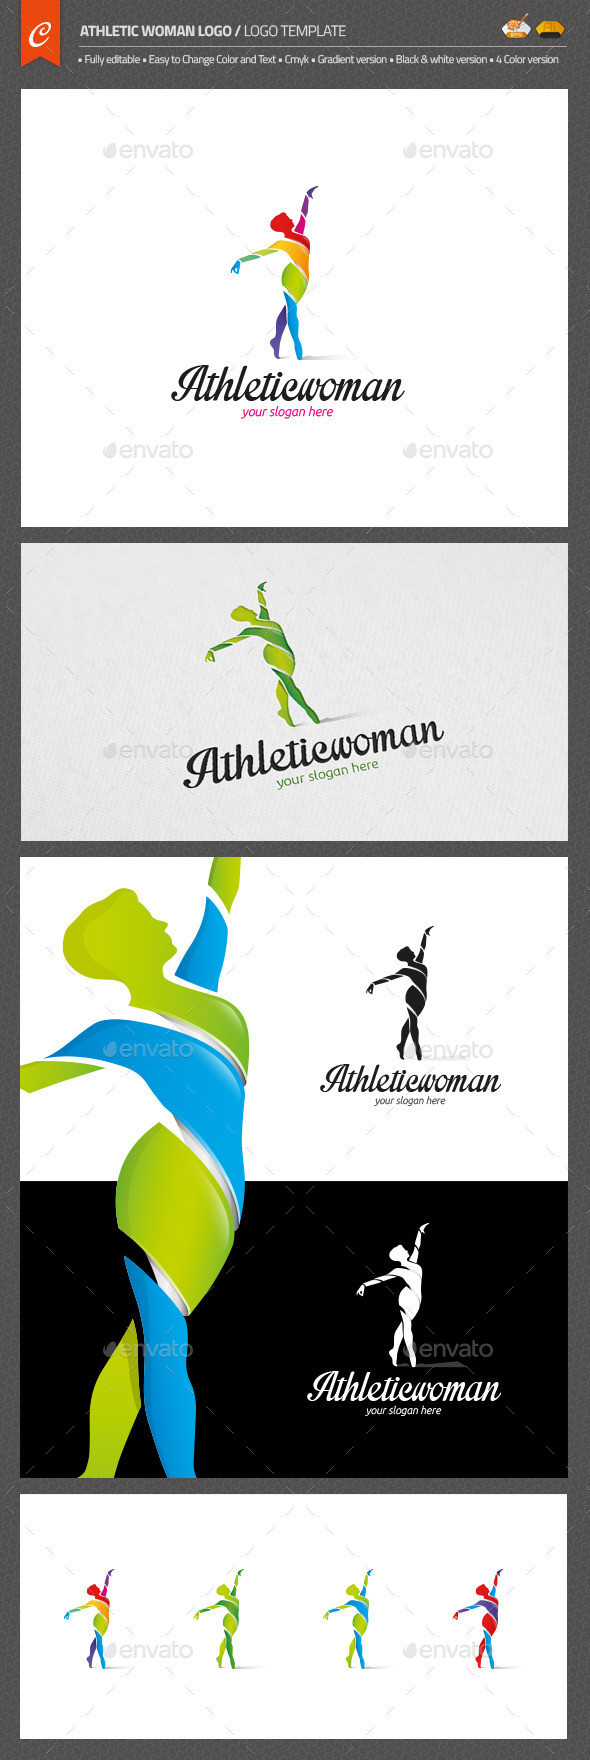 Athletic woman logo